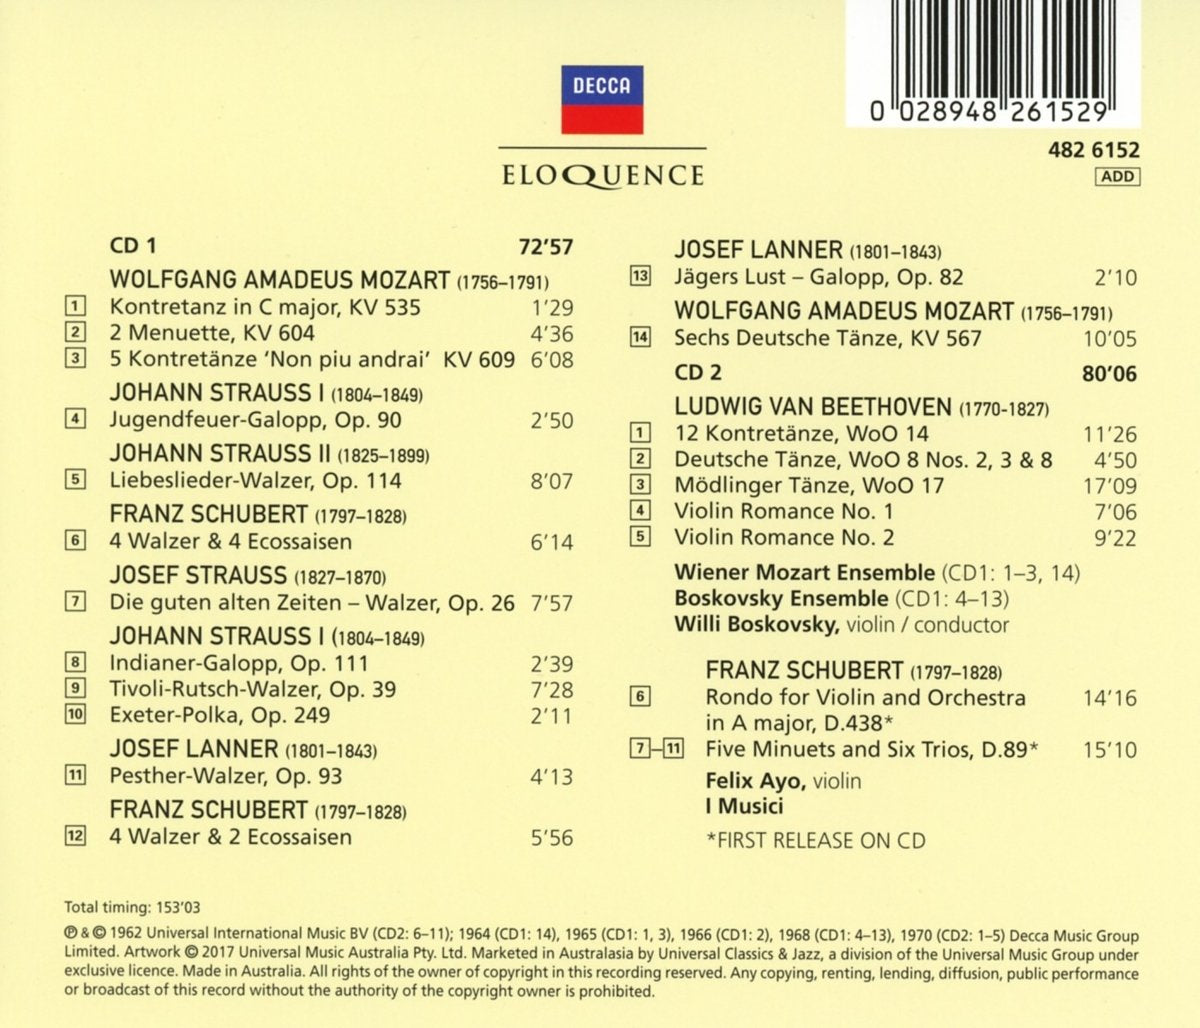 DANCES OF OLD VIENNA - VIENNA MOZART ENSEMBLE, BOSKOVSKY ENSEMBLE, I MUSICI (2 CDS)